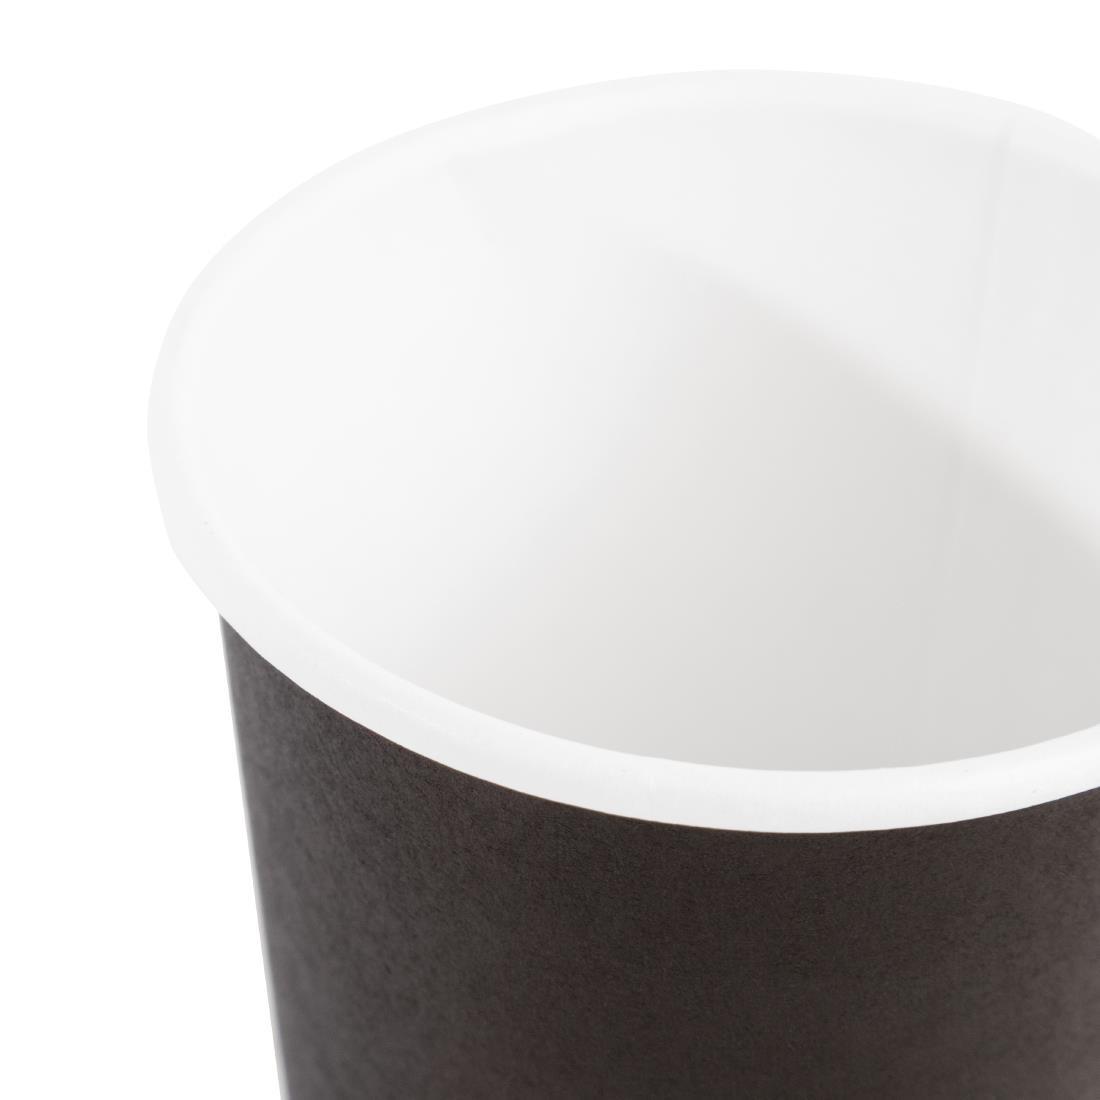 Fiesta Recyclable Espresso Cups Single Wall Black 112ml / 4oz (Pack of 50) - GF019  - 4